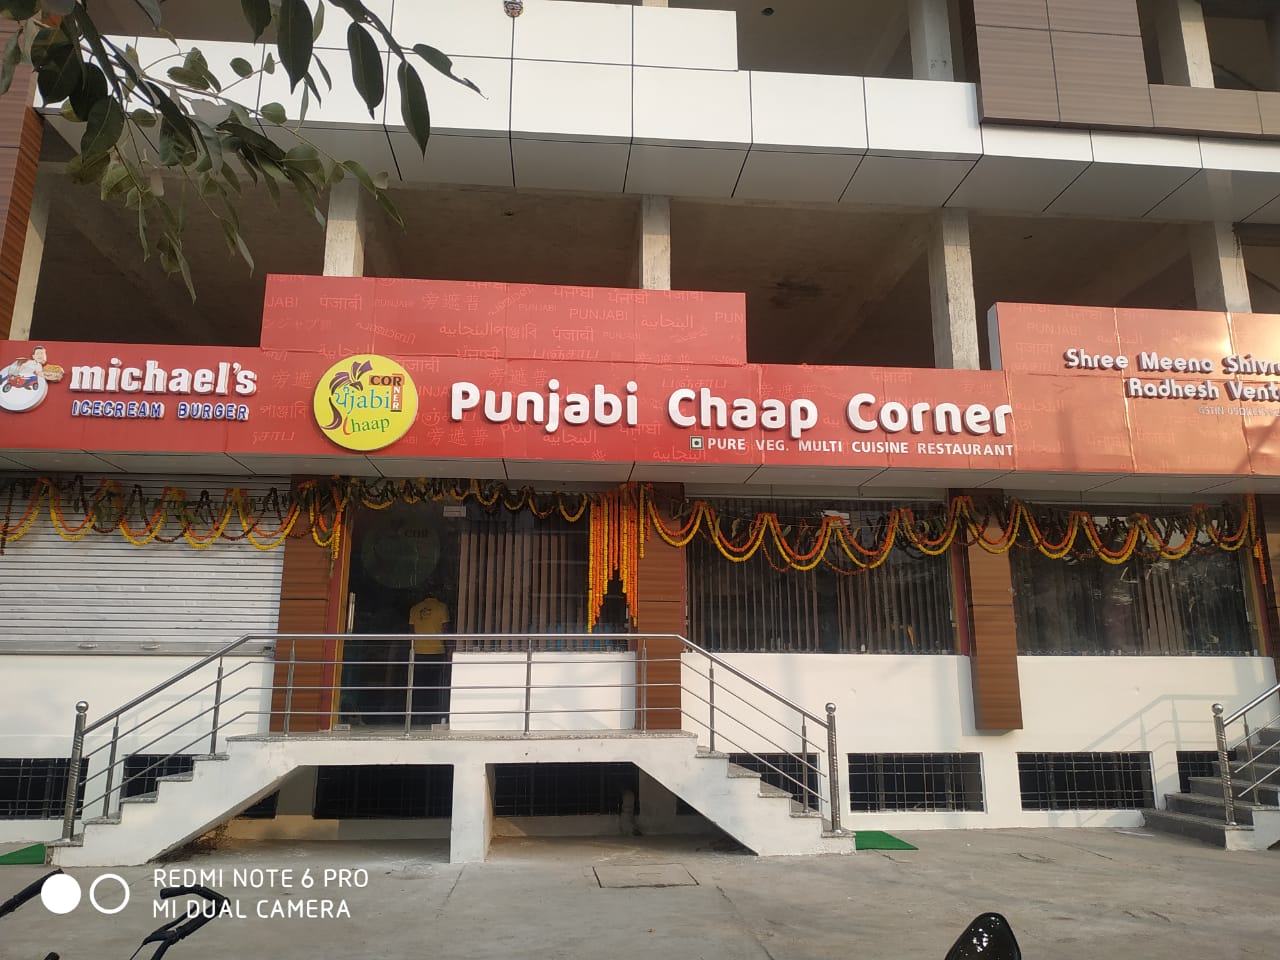 Punjabi Chaap Corner Franchise